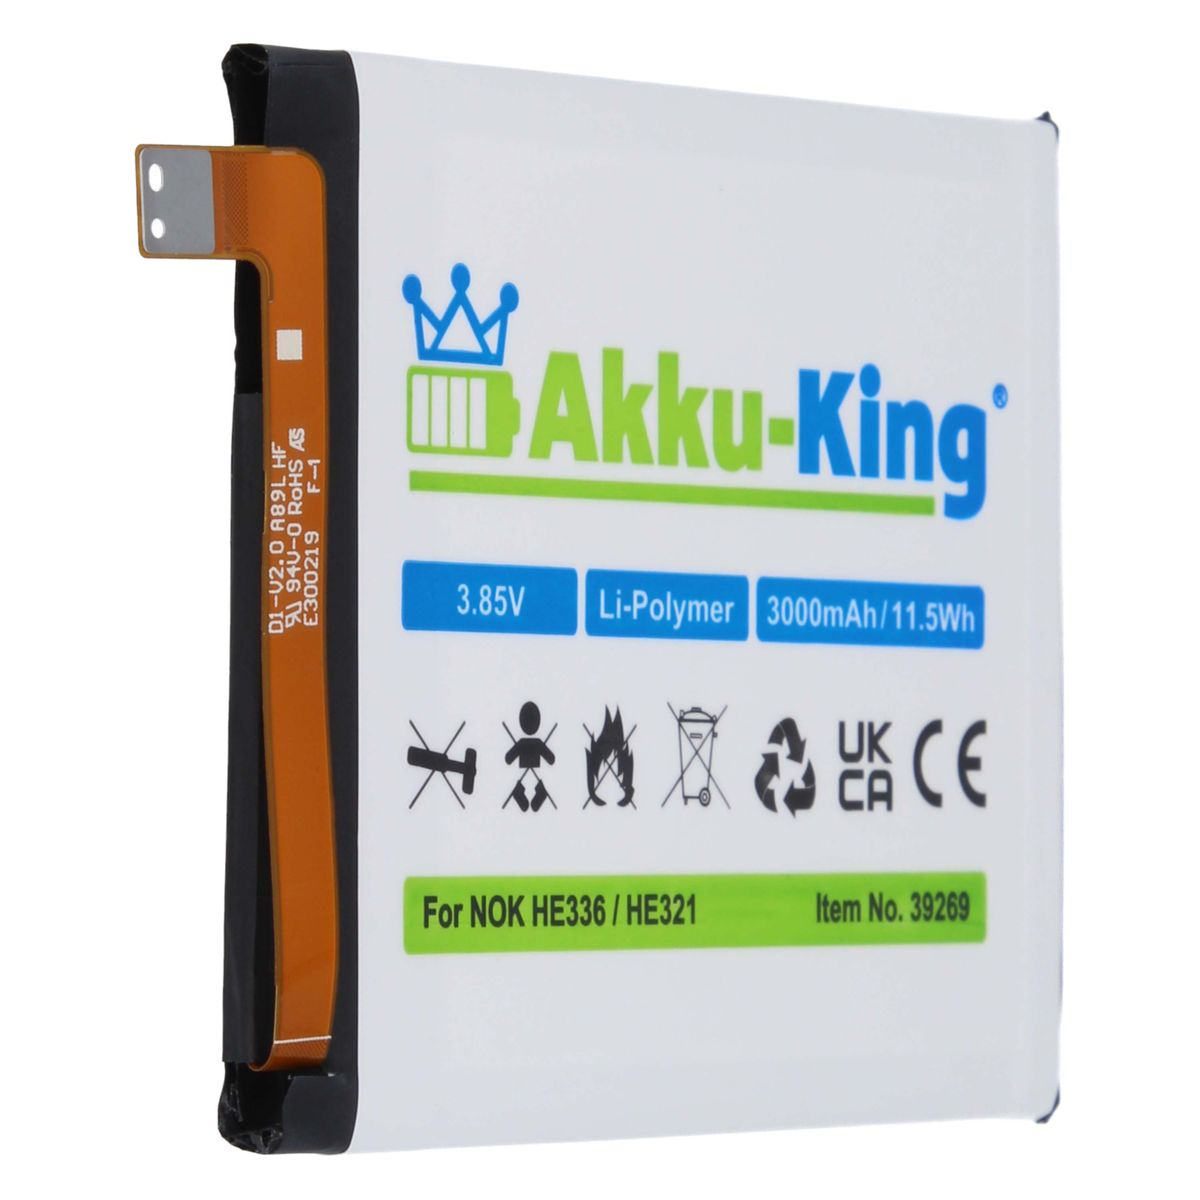 Handy-Akku, mit Volt, AKKU-KING 3.85 HE321 kompatibel Li-Polymer Nokia 3000mAh Akku